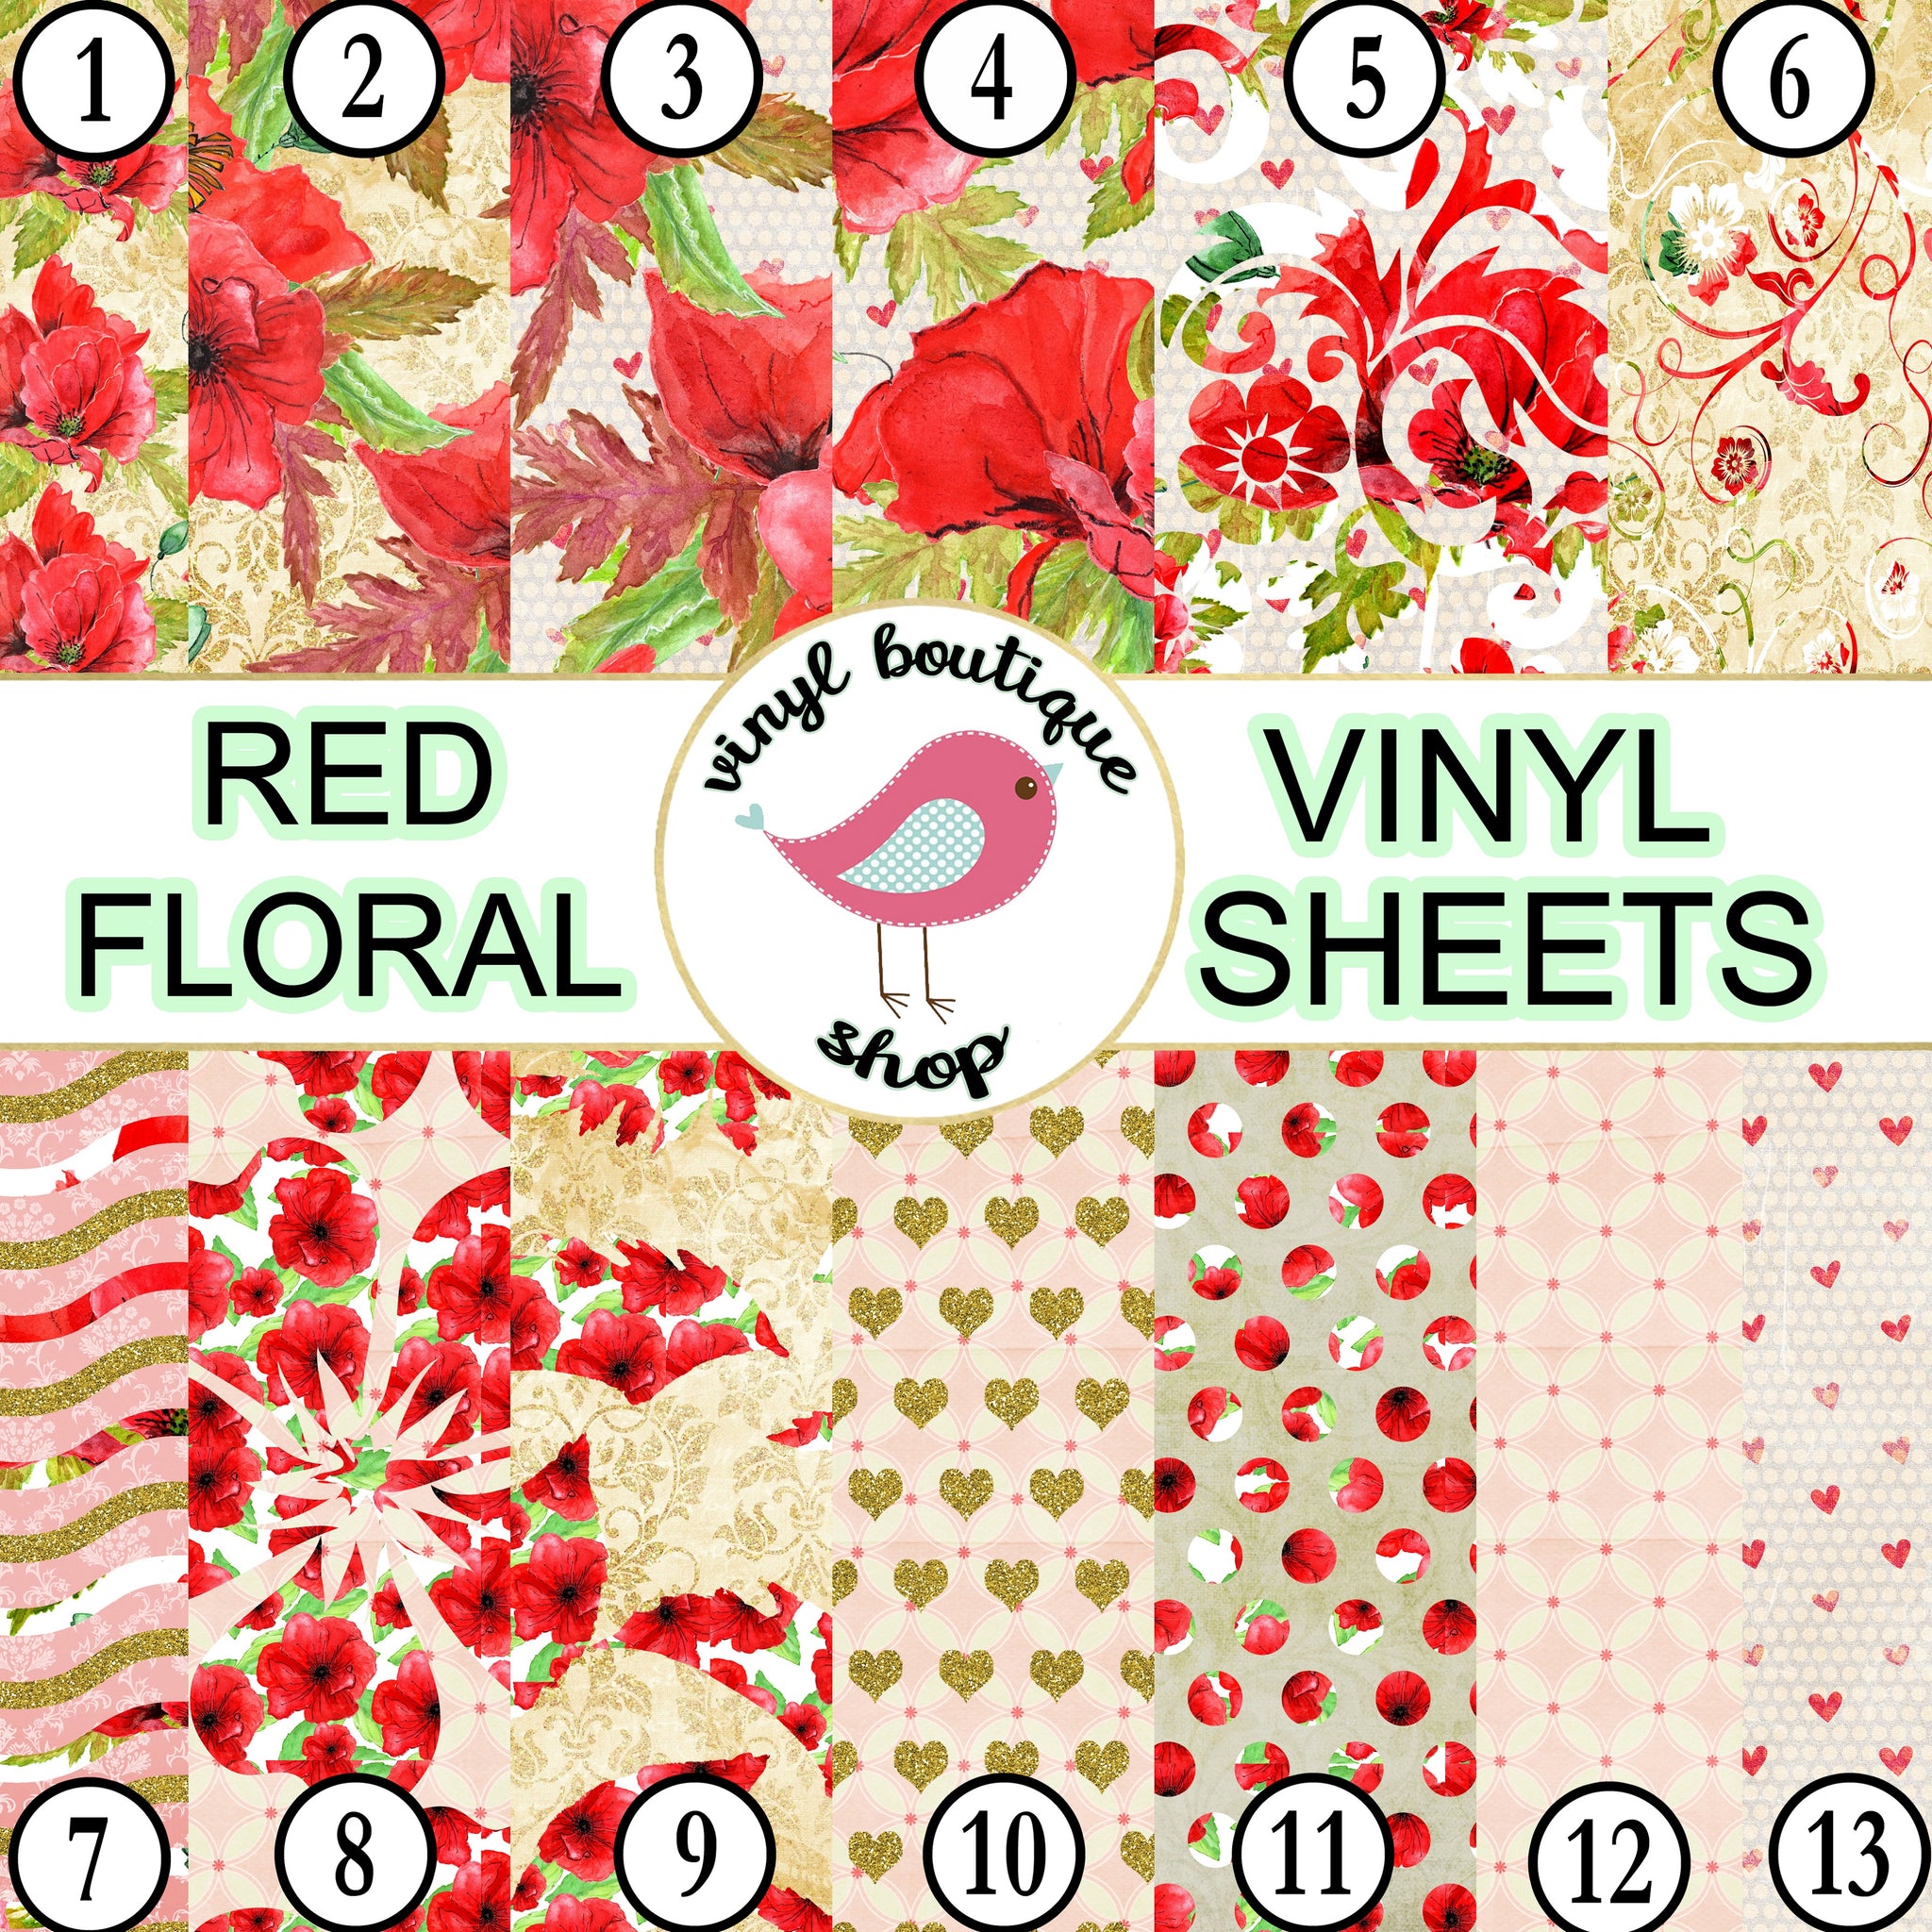 Red Floral print Adhesive Heat Transfer Vinyl Sheet - Vinyl Boutique Shop